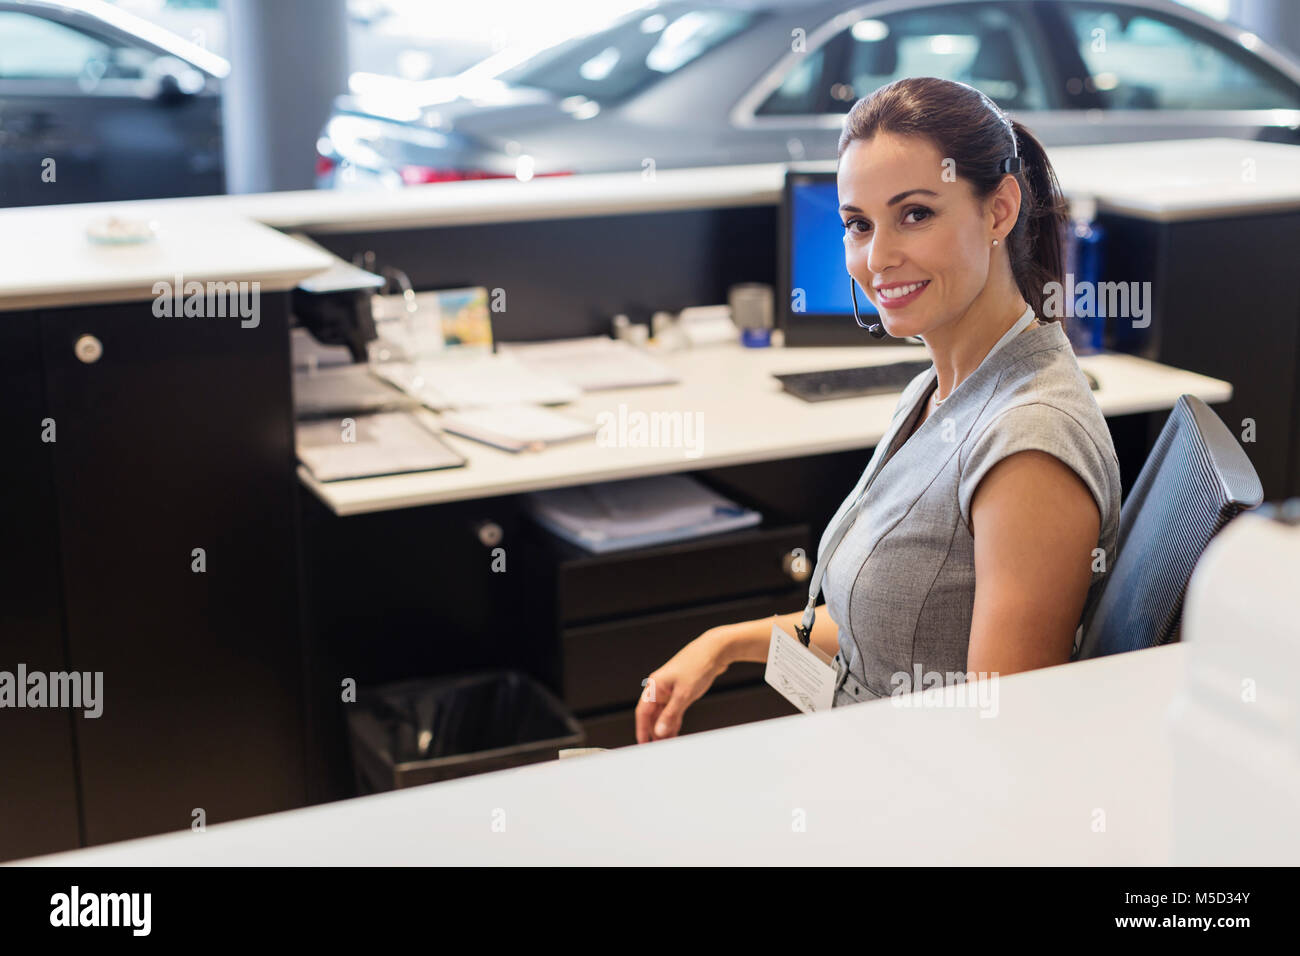 Portrait smiling, confident female receptionist working at desk in car dealership showroom Stock Photo